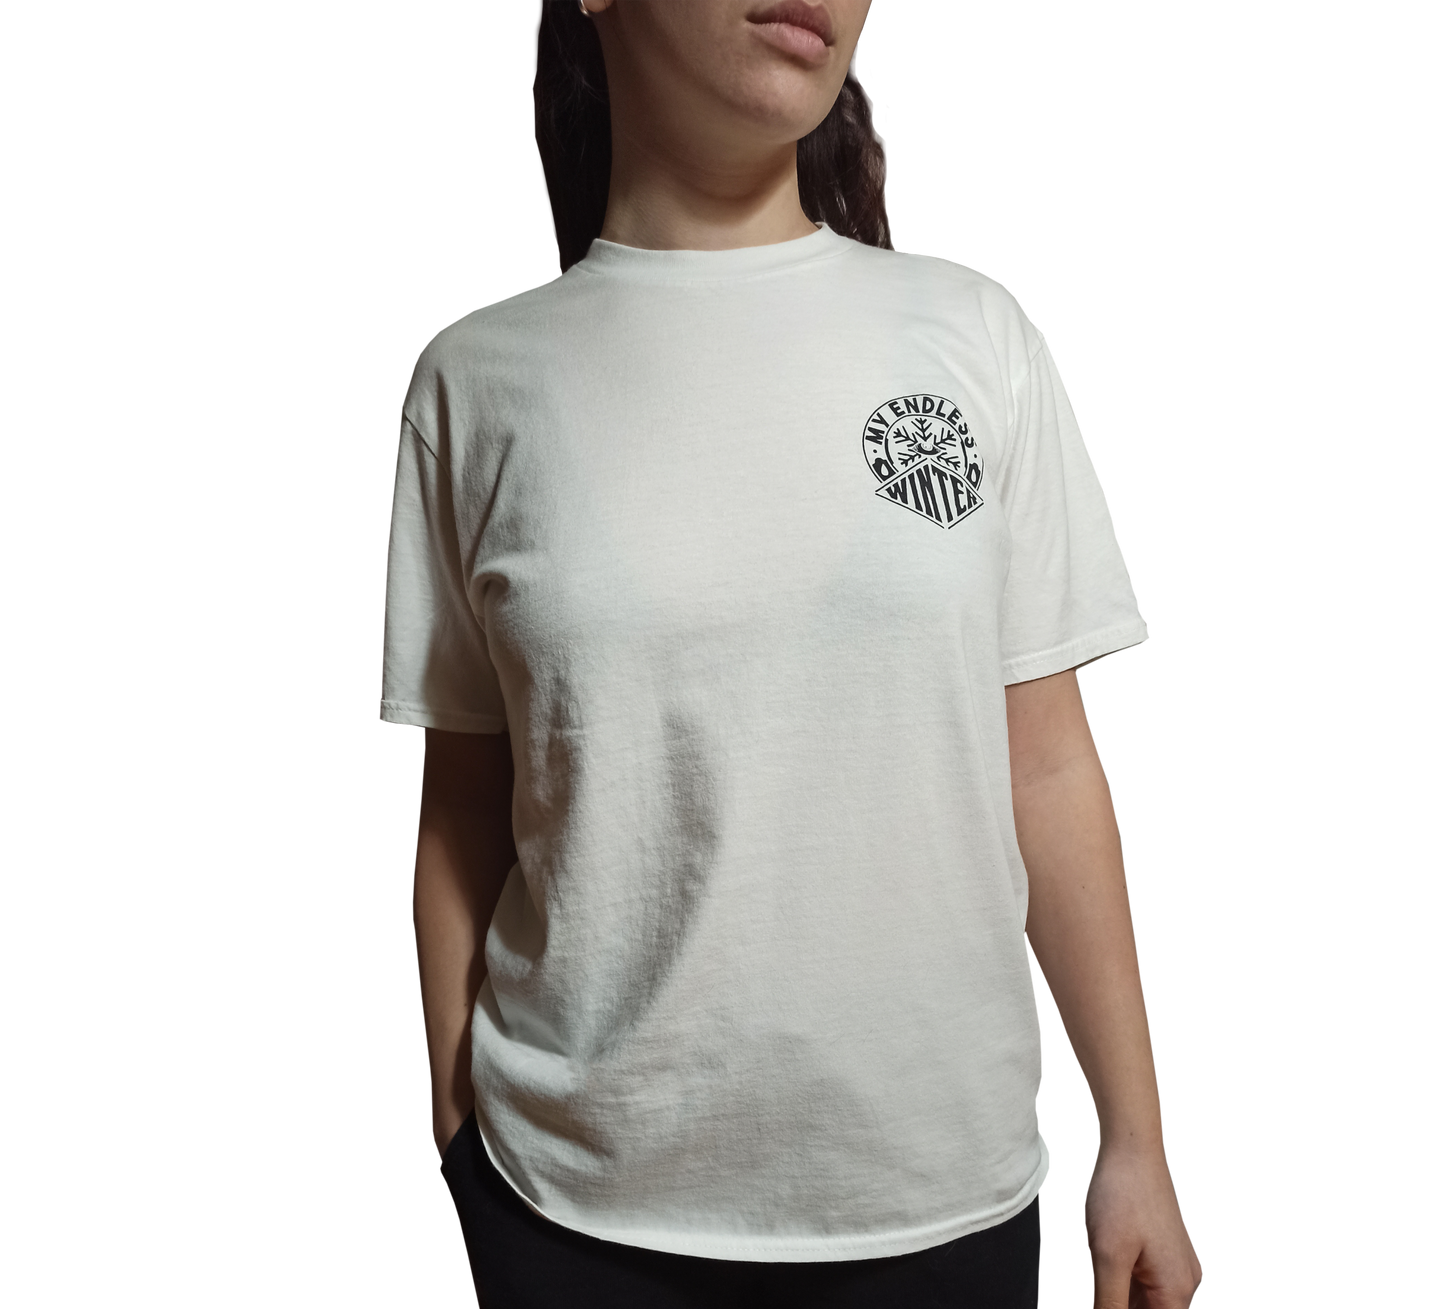 MEW Fire T-shirt (White)